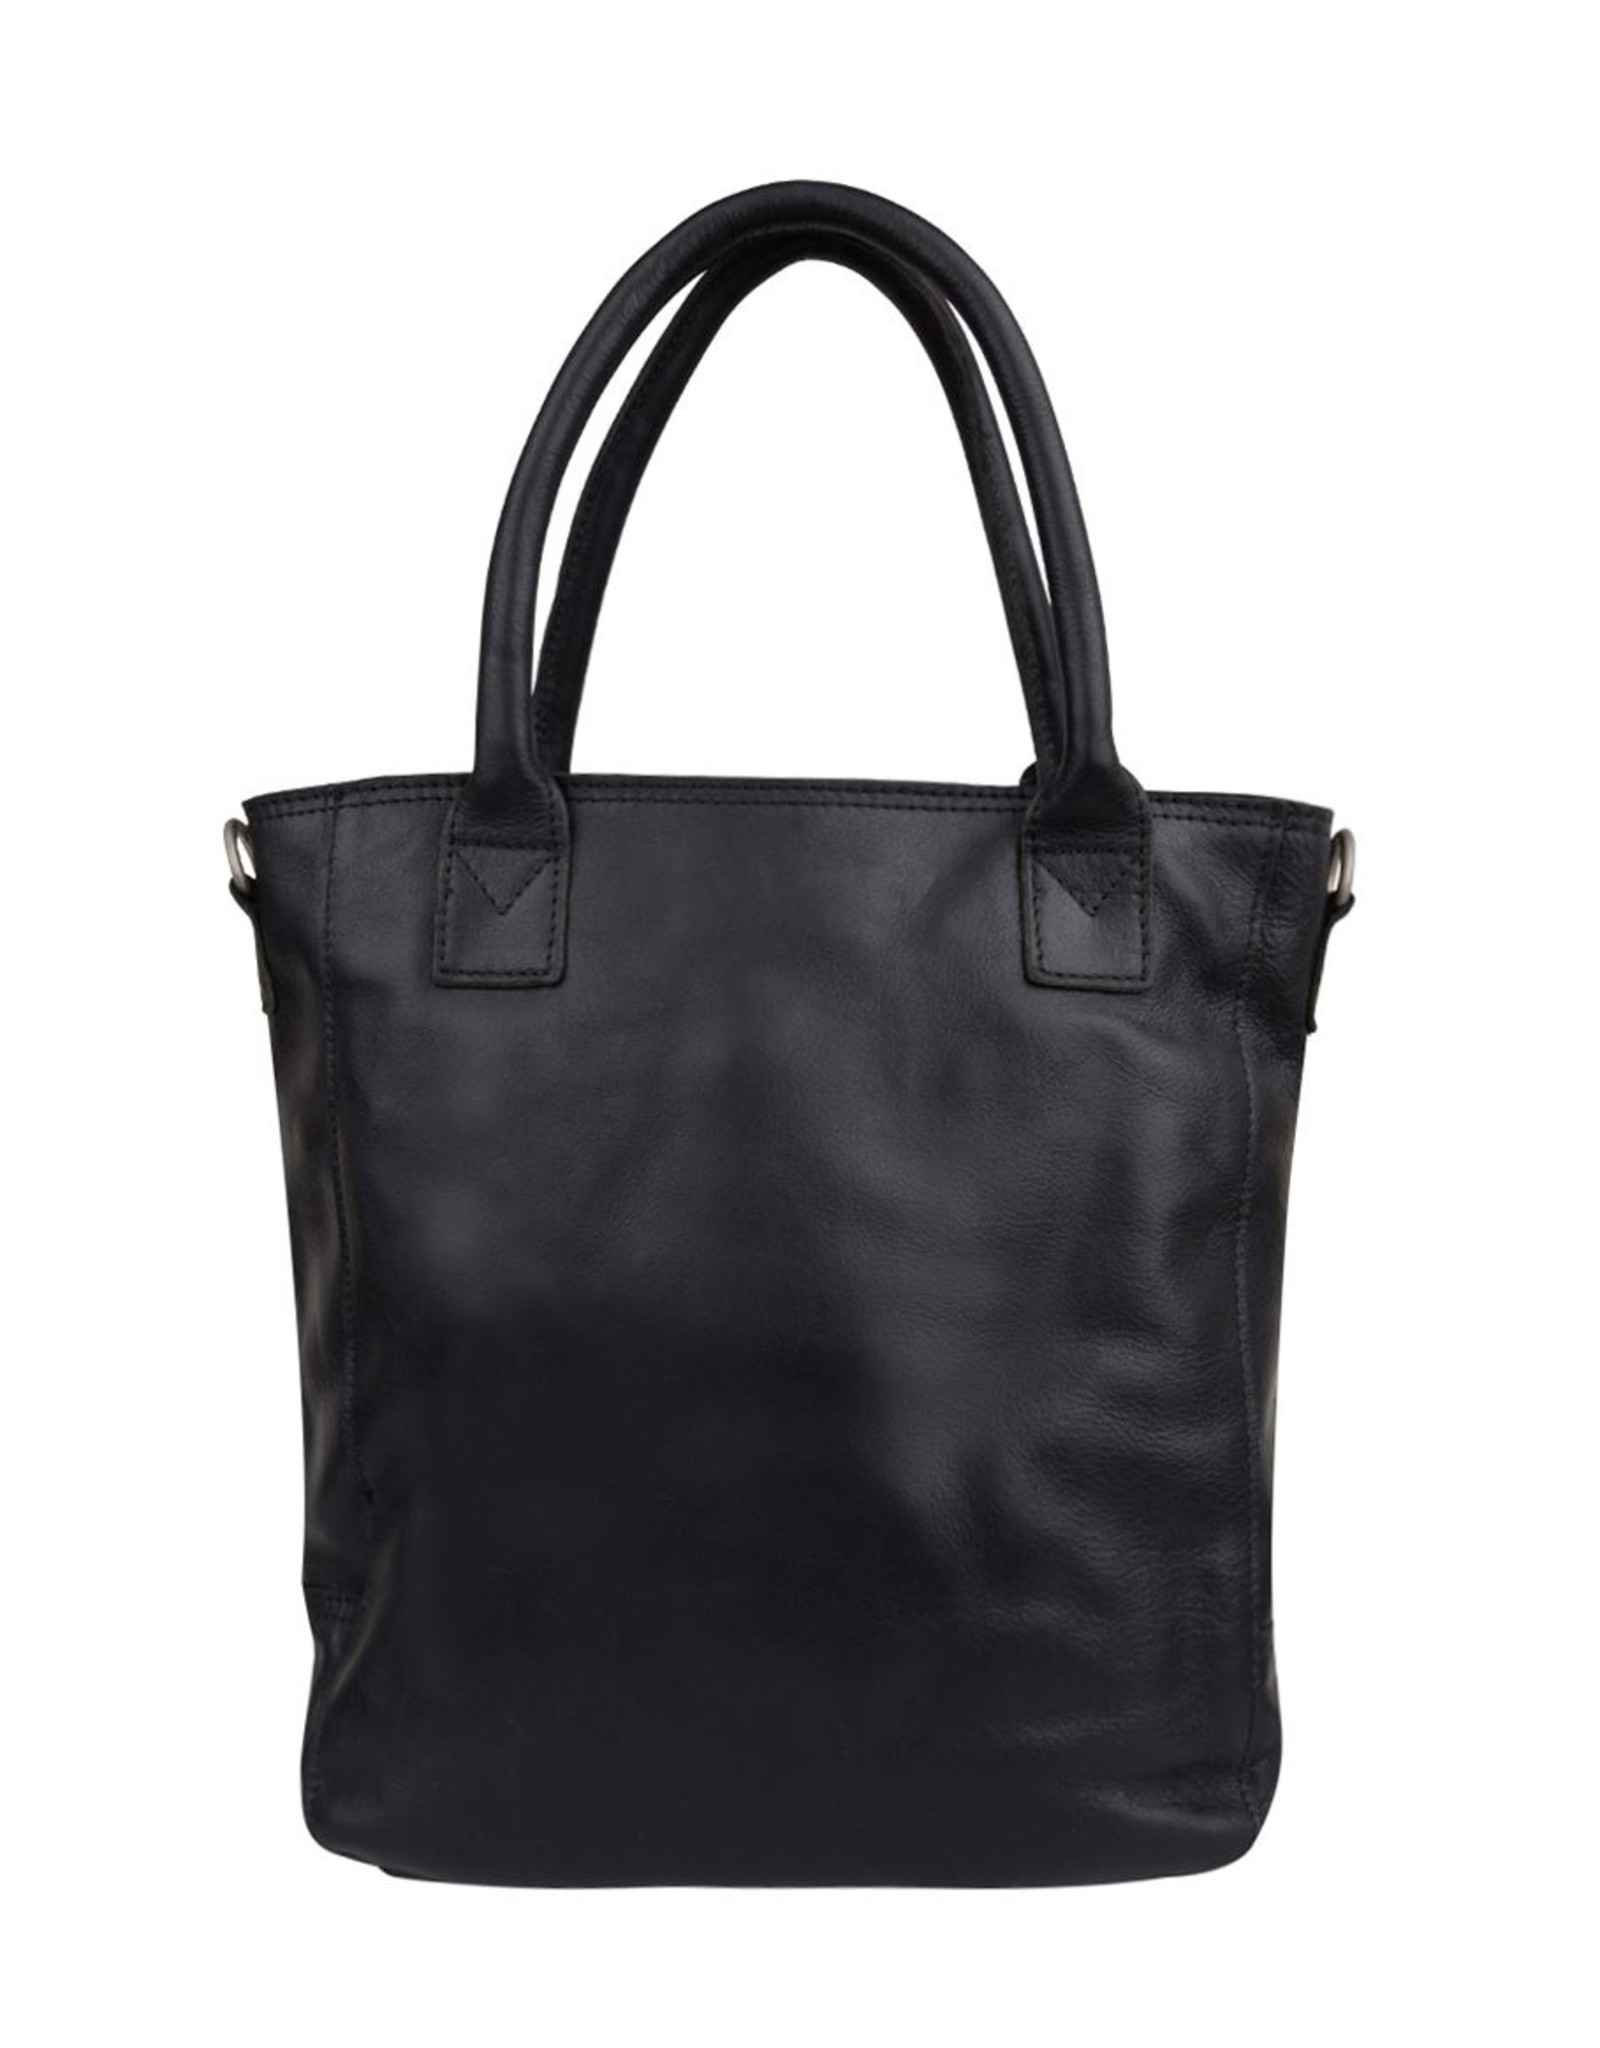 Cowboysbag Leather bags - Leather Bag Cowboysbag Mellor Black